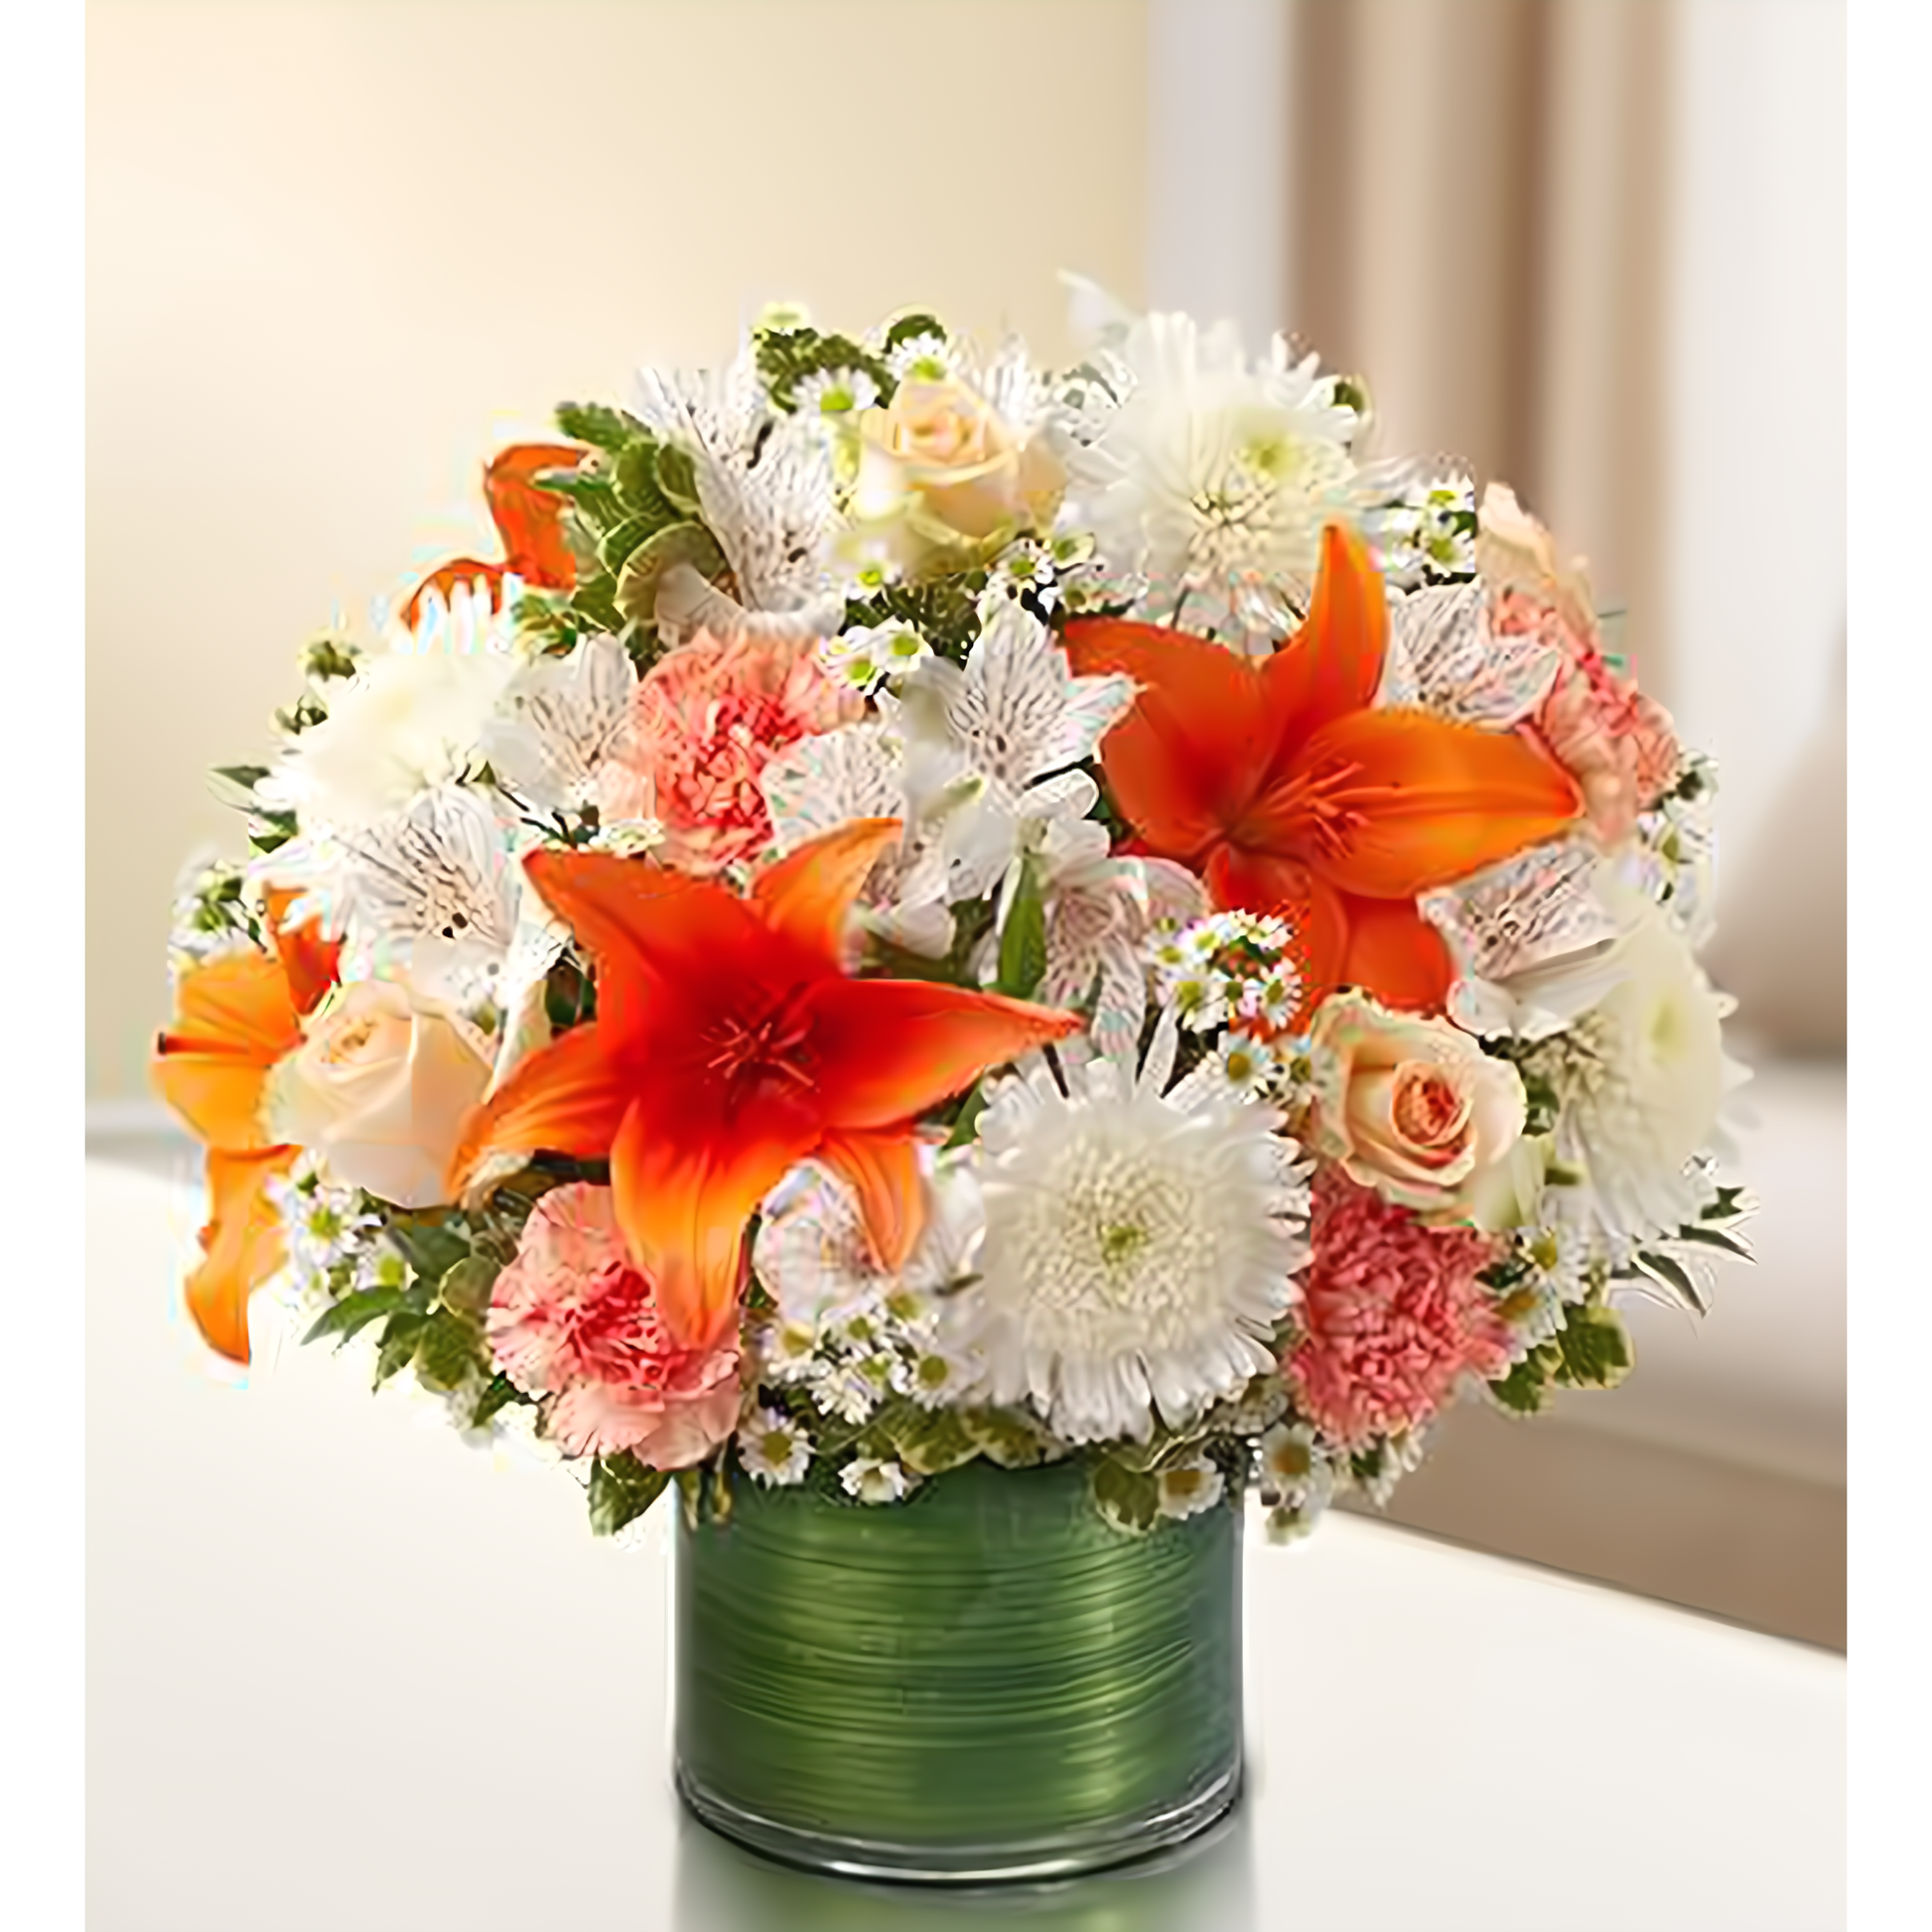 Cherished Memories - Peach, Orange and White - Funeral > Vase Arrangements